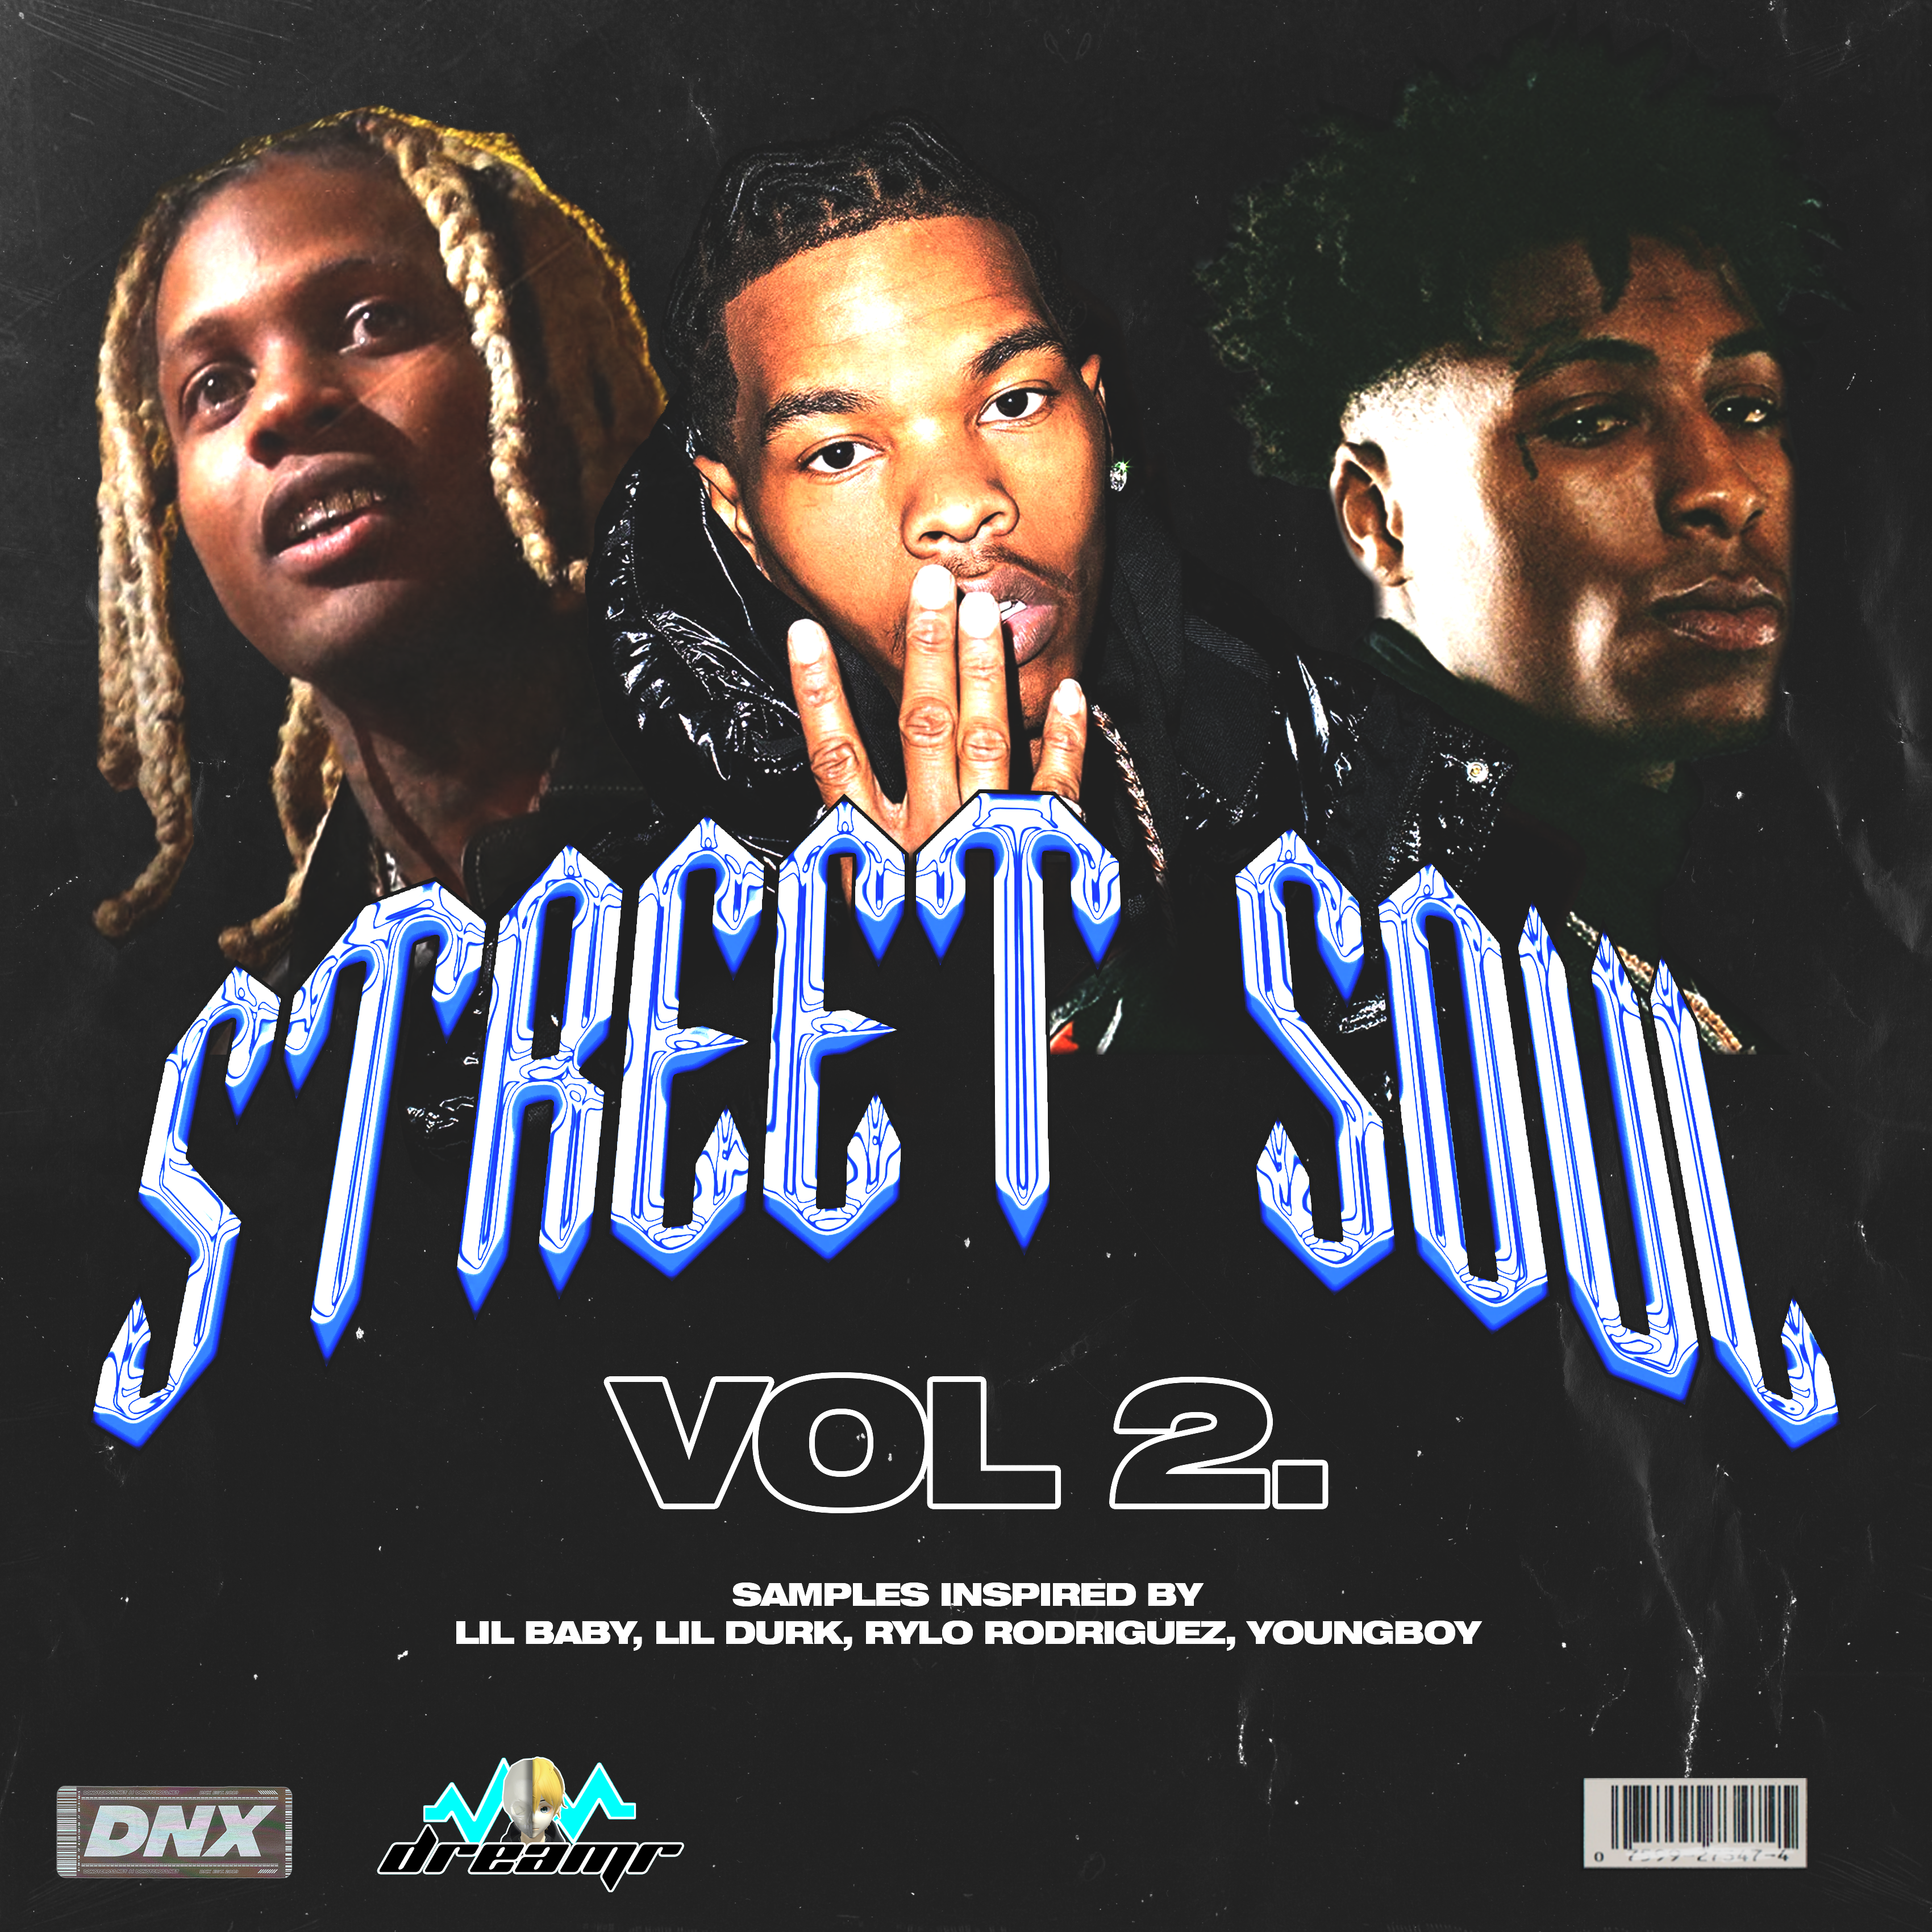 Street Soul Vol 2 [Lil Baby, Polo G, Youngboy NBA, etc]